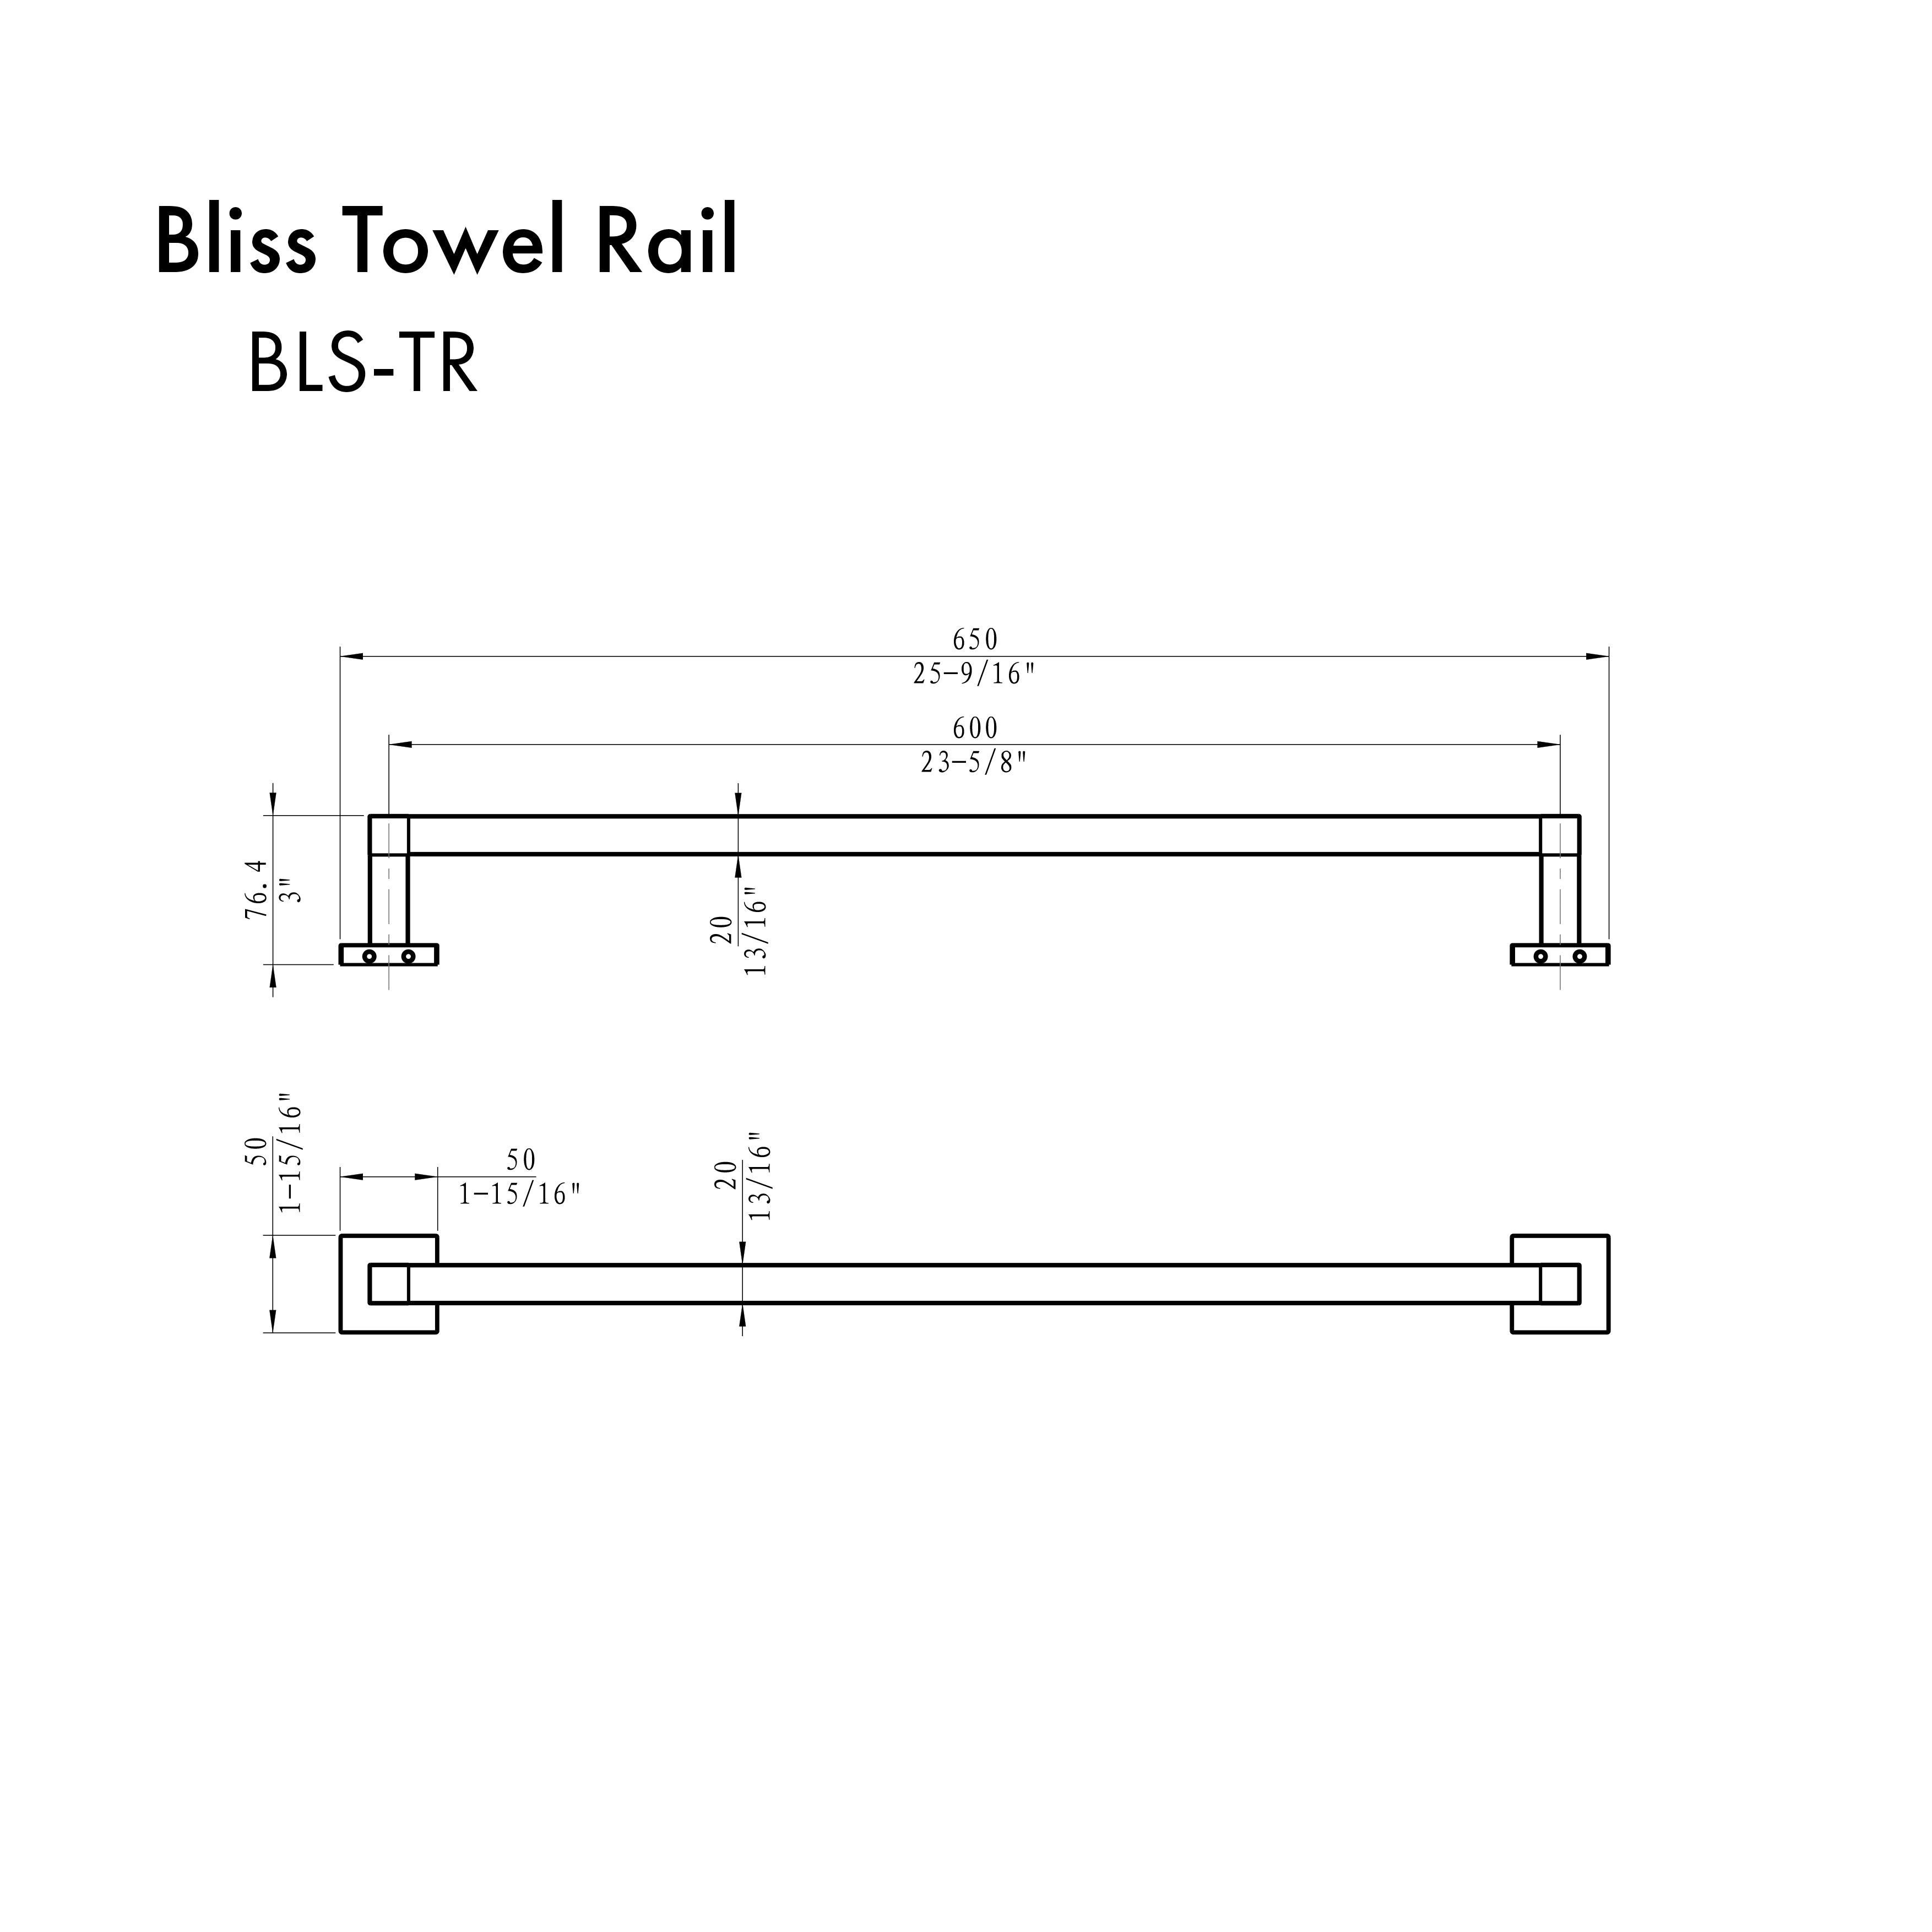 ZLINE Bliss Towel Rail in Brushed Nickel (BLS-TR-BN)